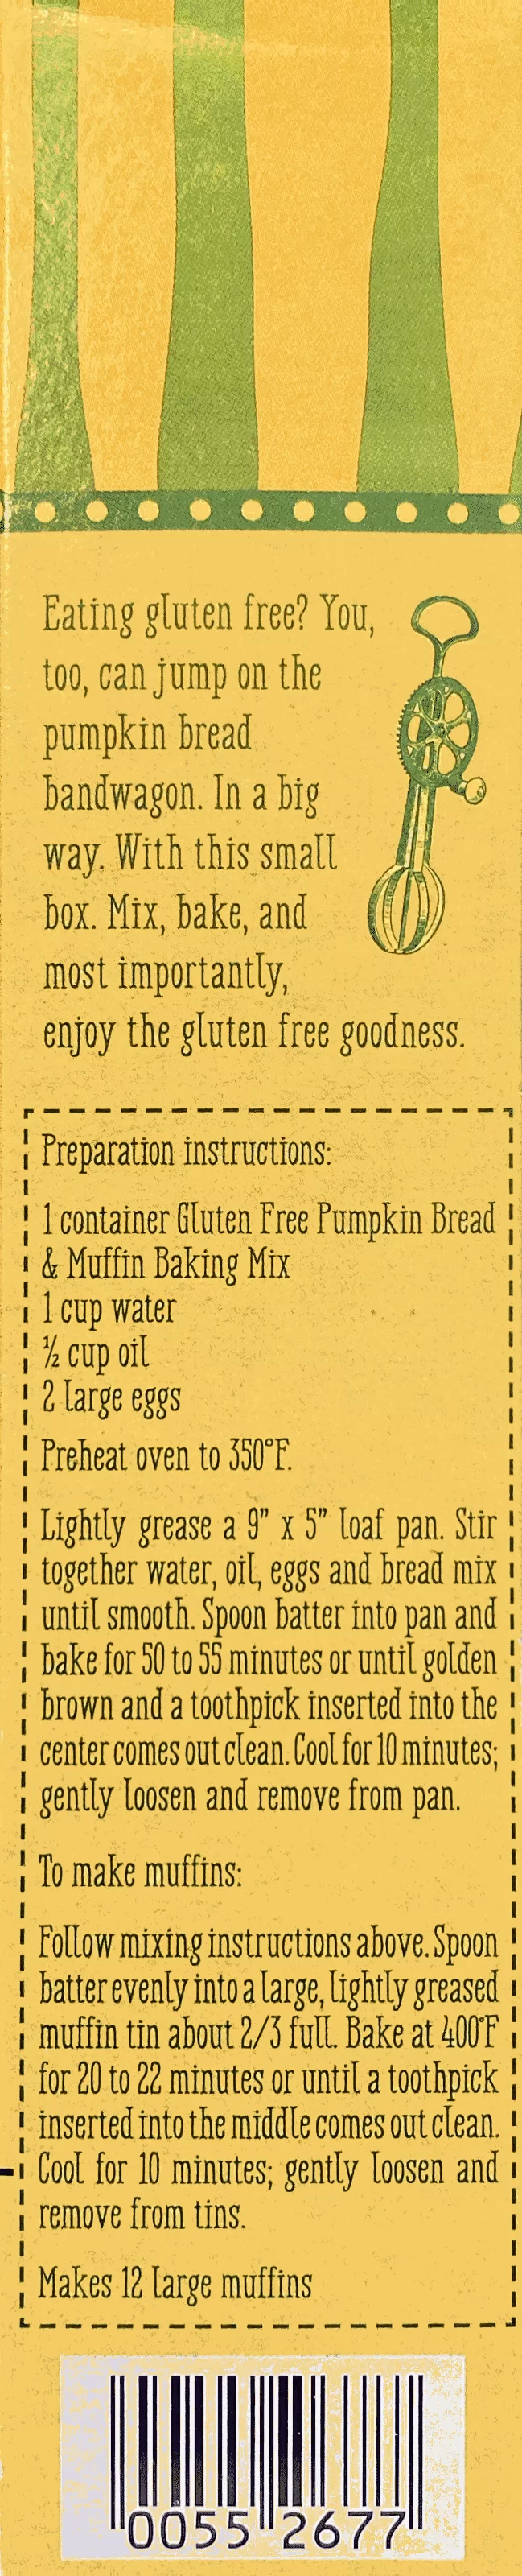 Trader Joe's Gluten Free Pumpkin Bread and Muffin Mix - Recipe